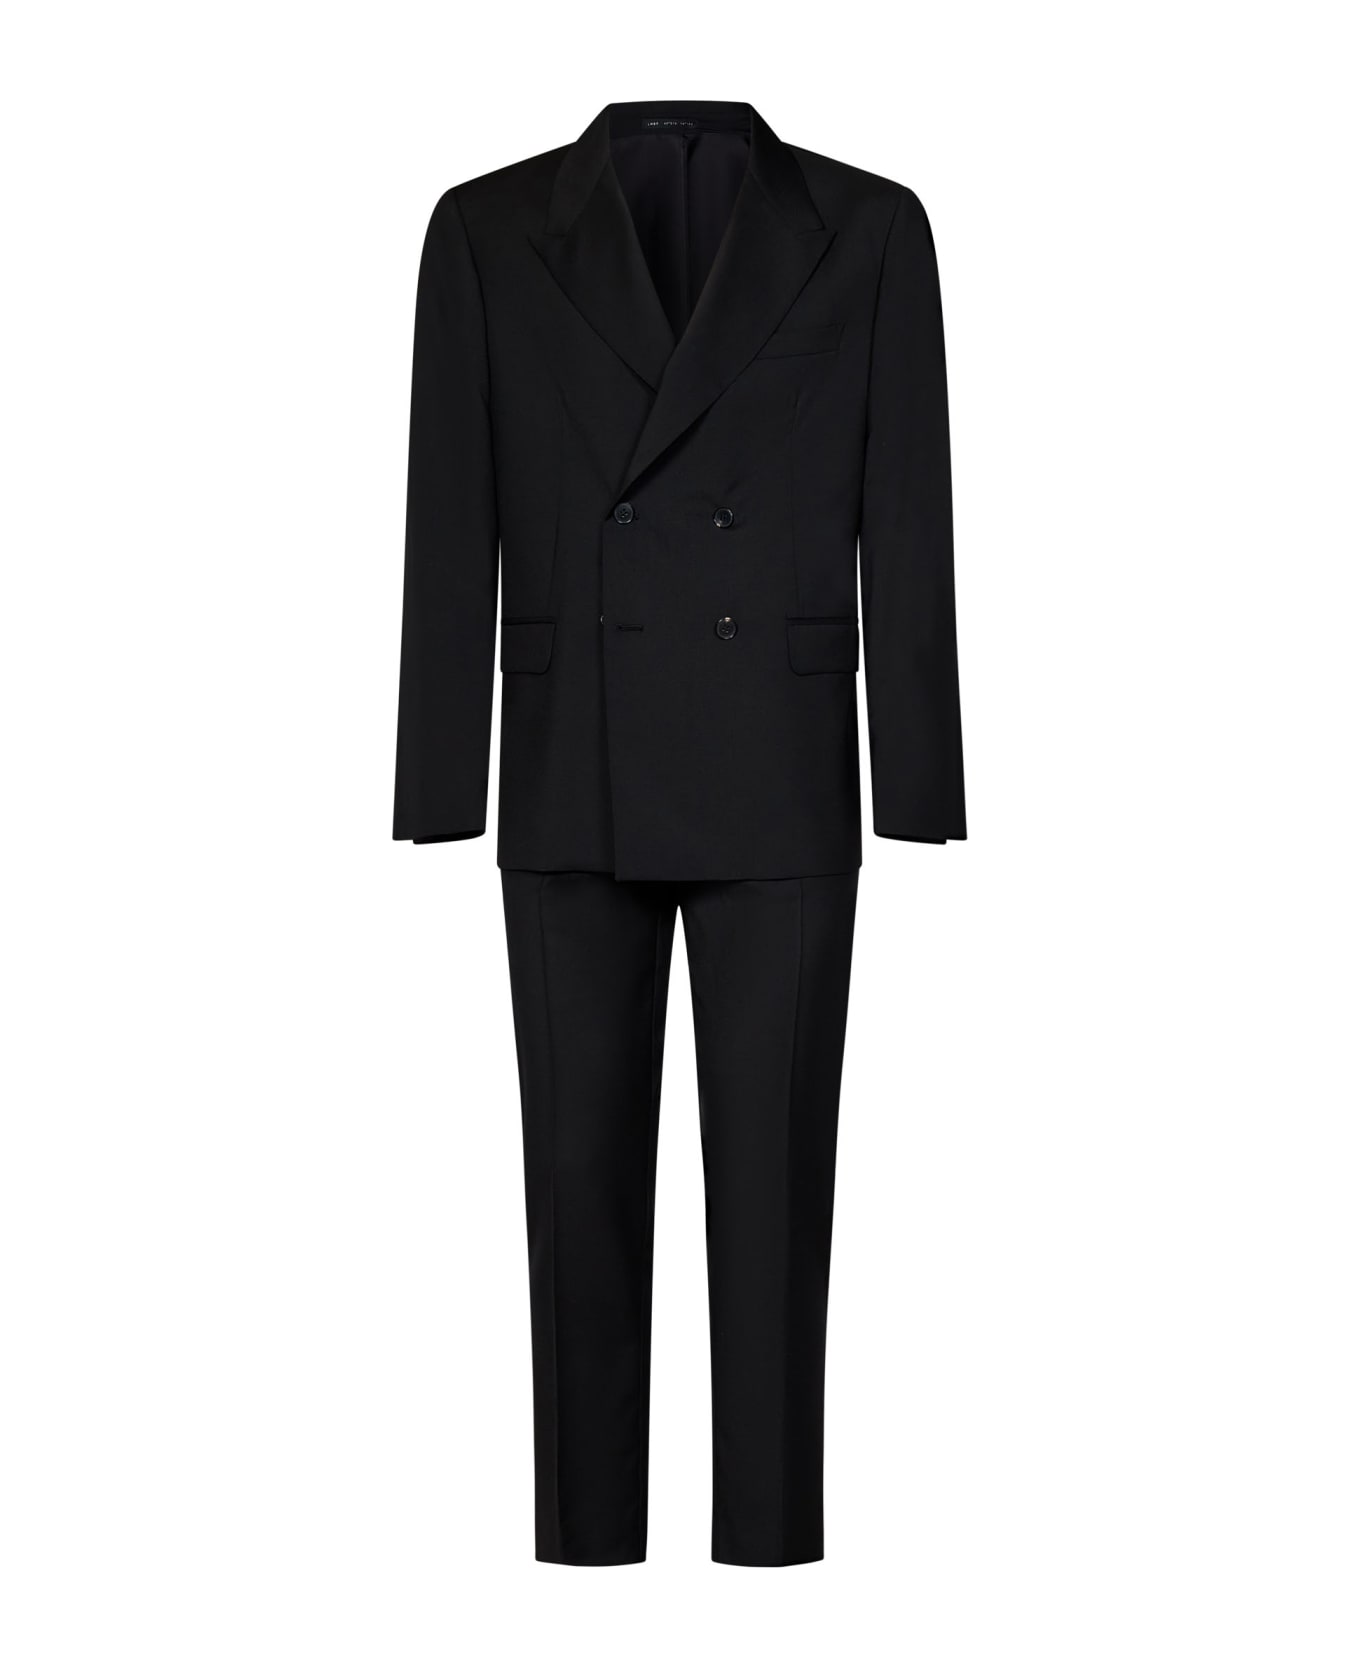 Low Brand 2b Suit - Black